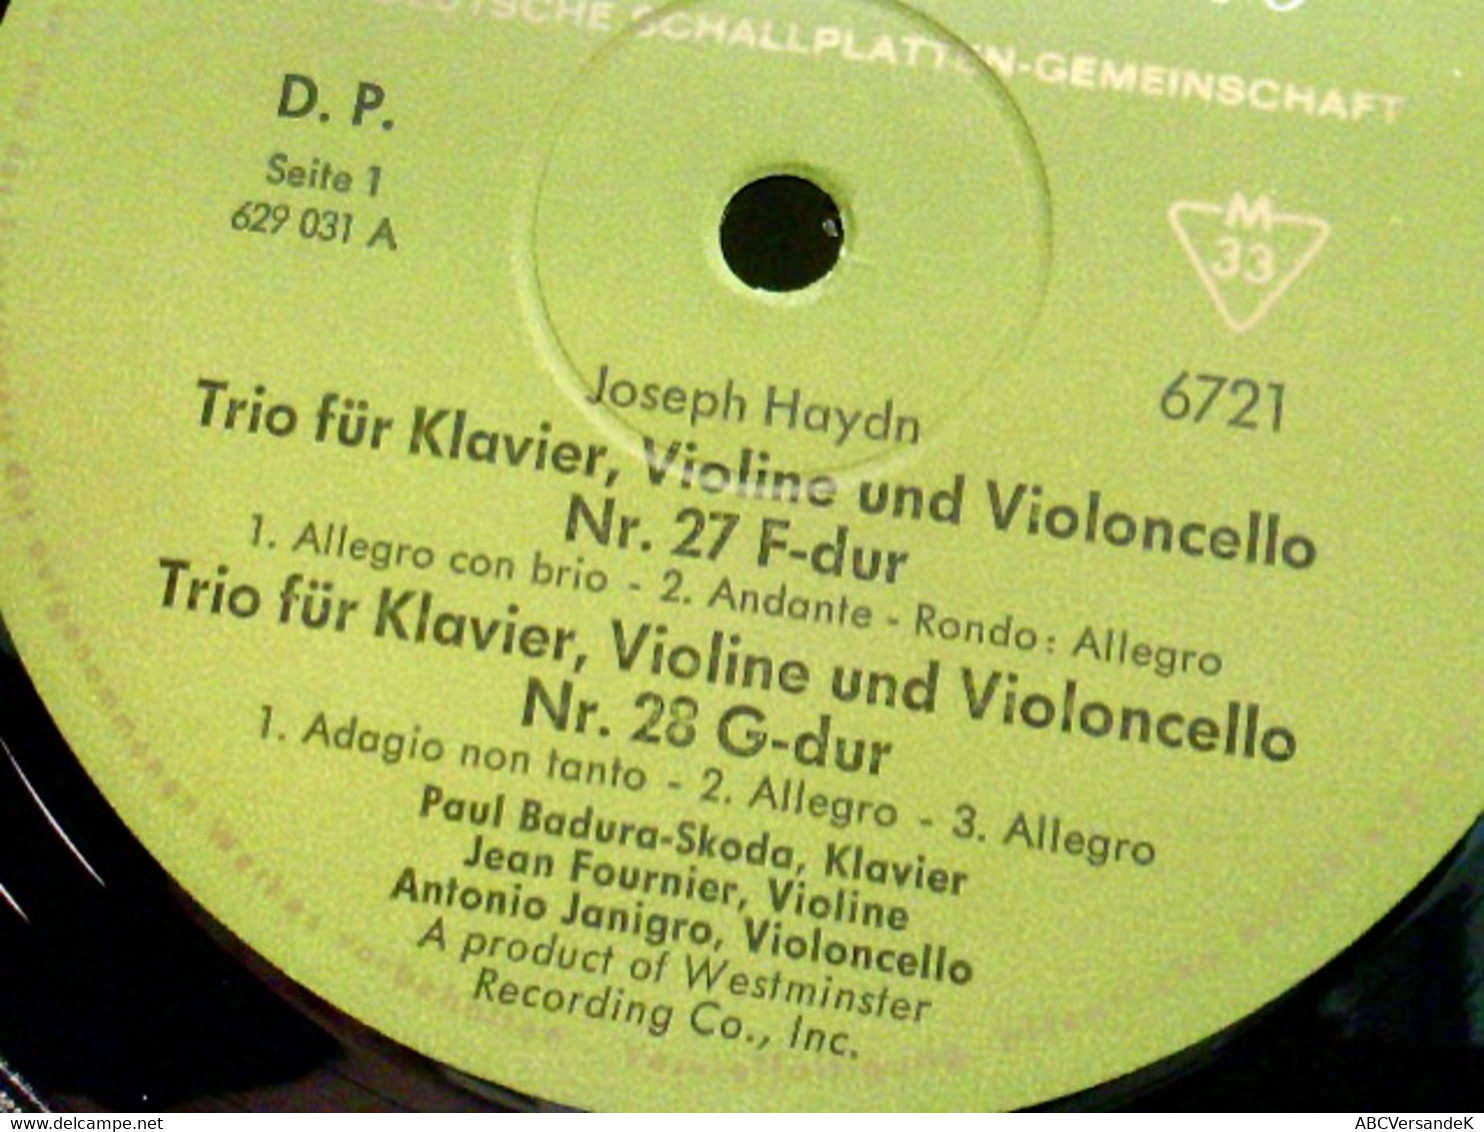 Joseph Haydn - Jean Fournier, Antonio Janigro, Paul Badura-Skoda  Klaviertrio Nr. 27 - 30 - Trios Für Klavier - Sport